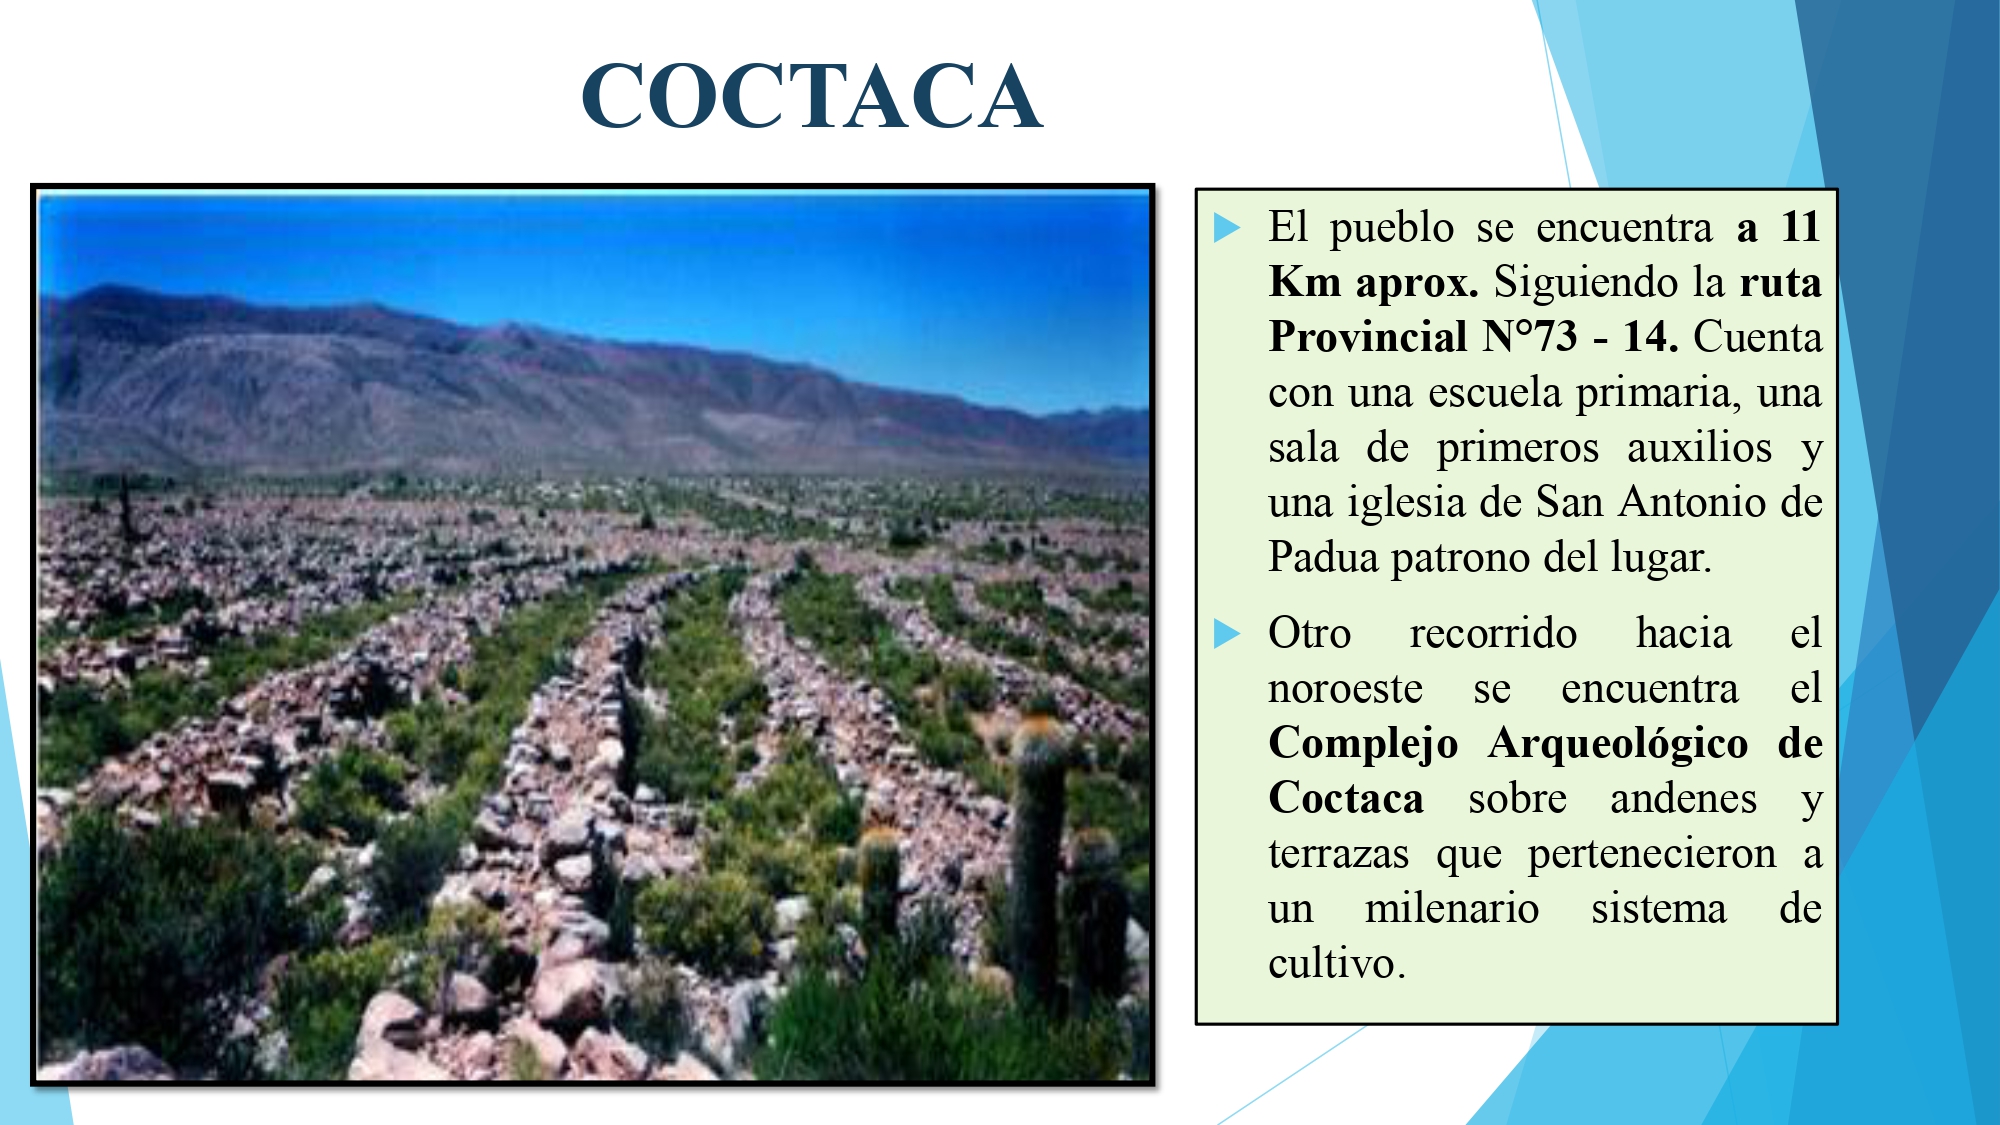 Coctaca